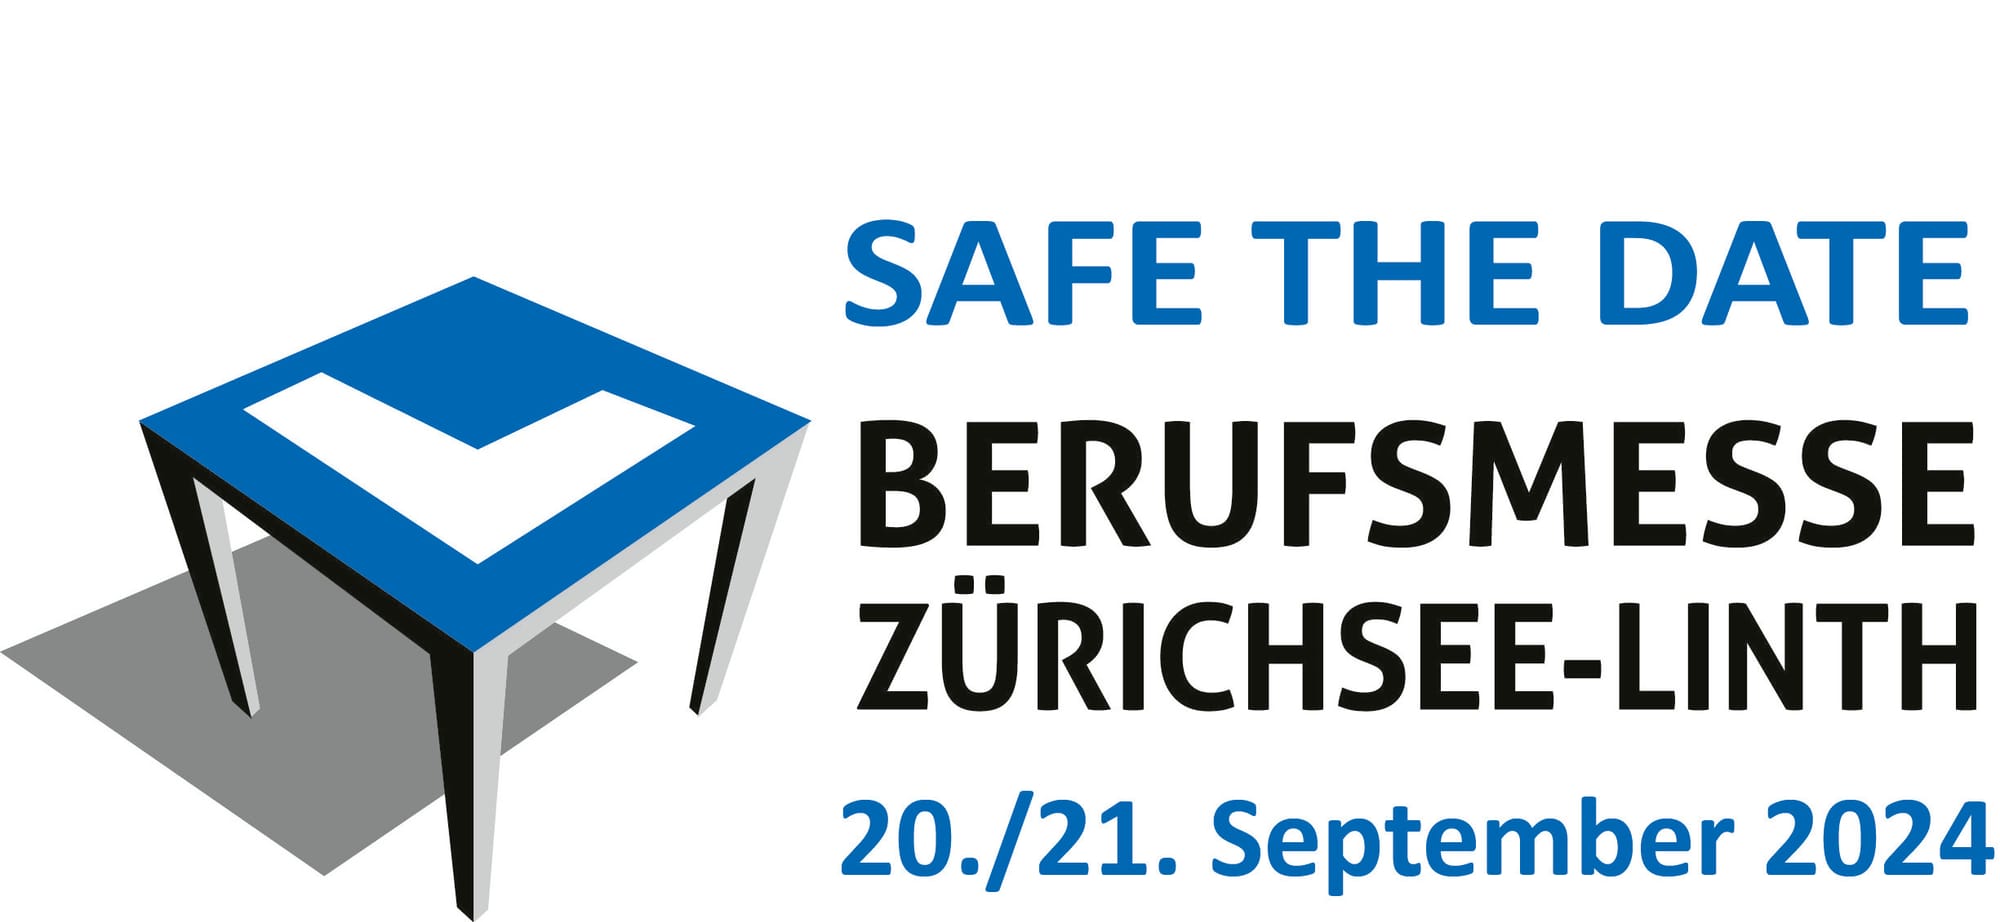 Flyer "Safe the date" Berufsmesse Zürichsee-Linth 20./21. September 2024